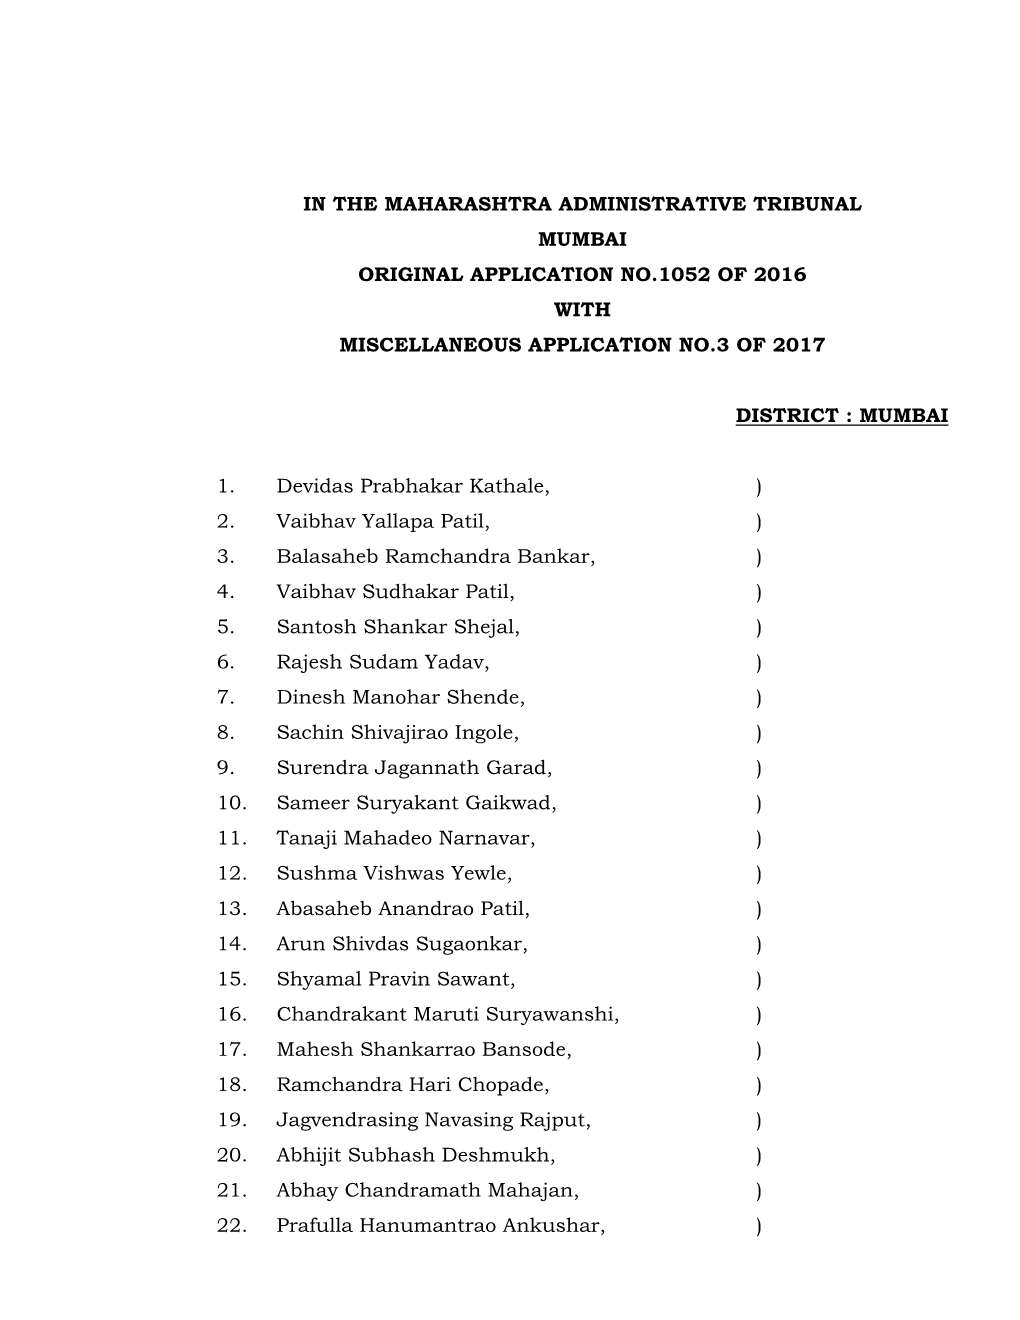 In the Maharashtra Administrative Tribunal Mumbai Original Application No.1052 of 2016 with Miscellaneous Application No.3 of 2017